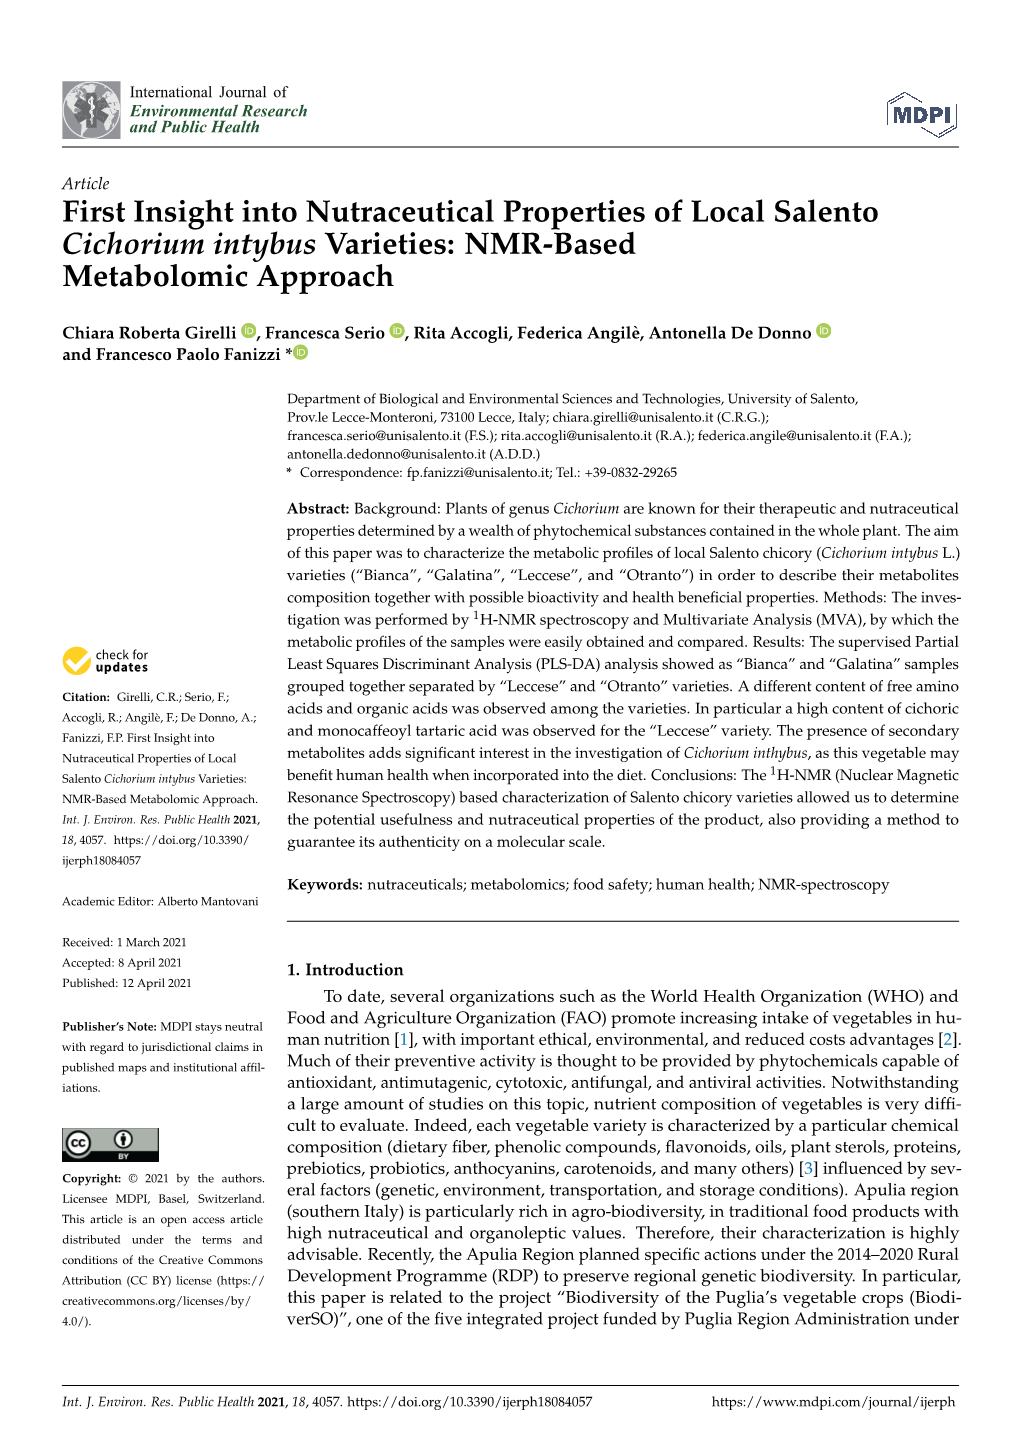 NMR-Based Metabolomic Approach